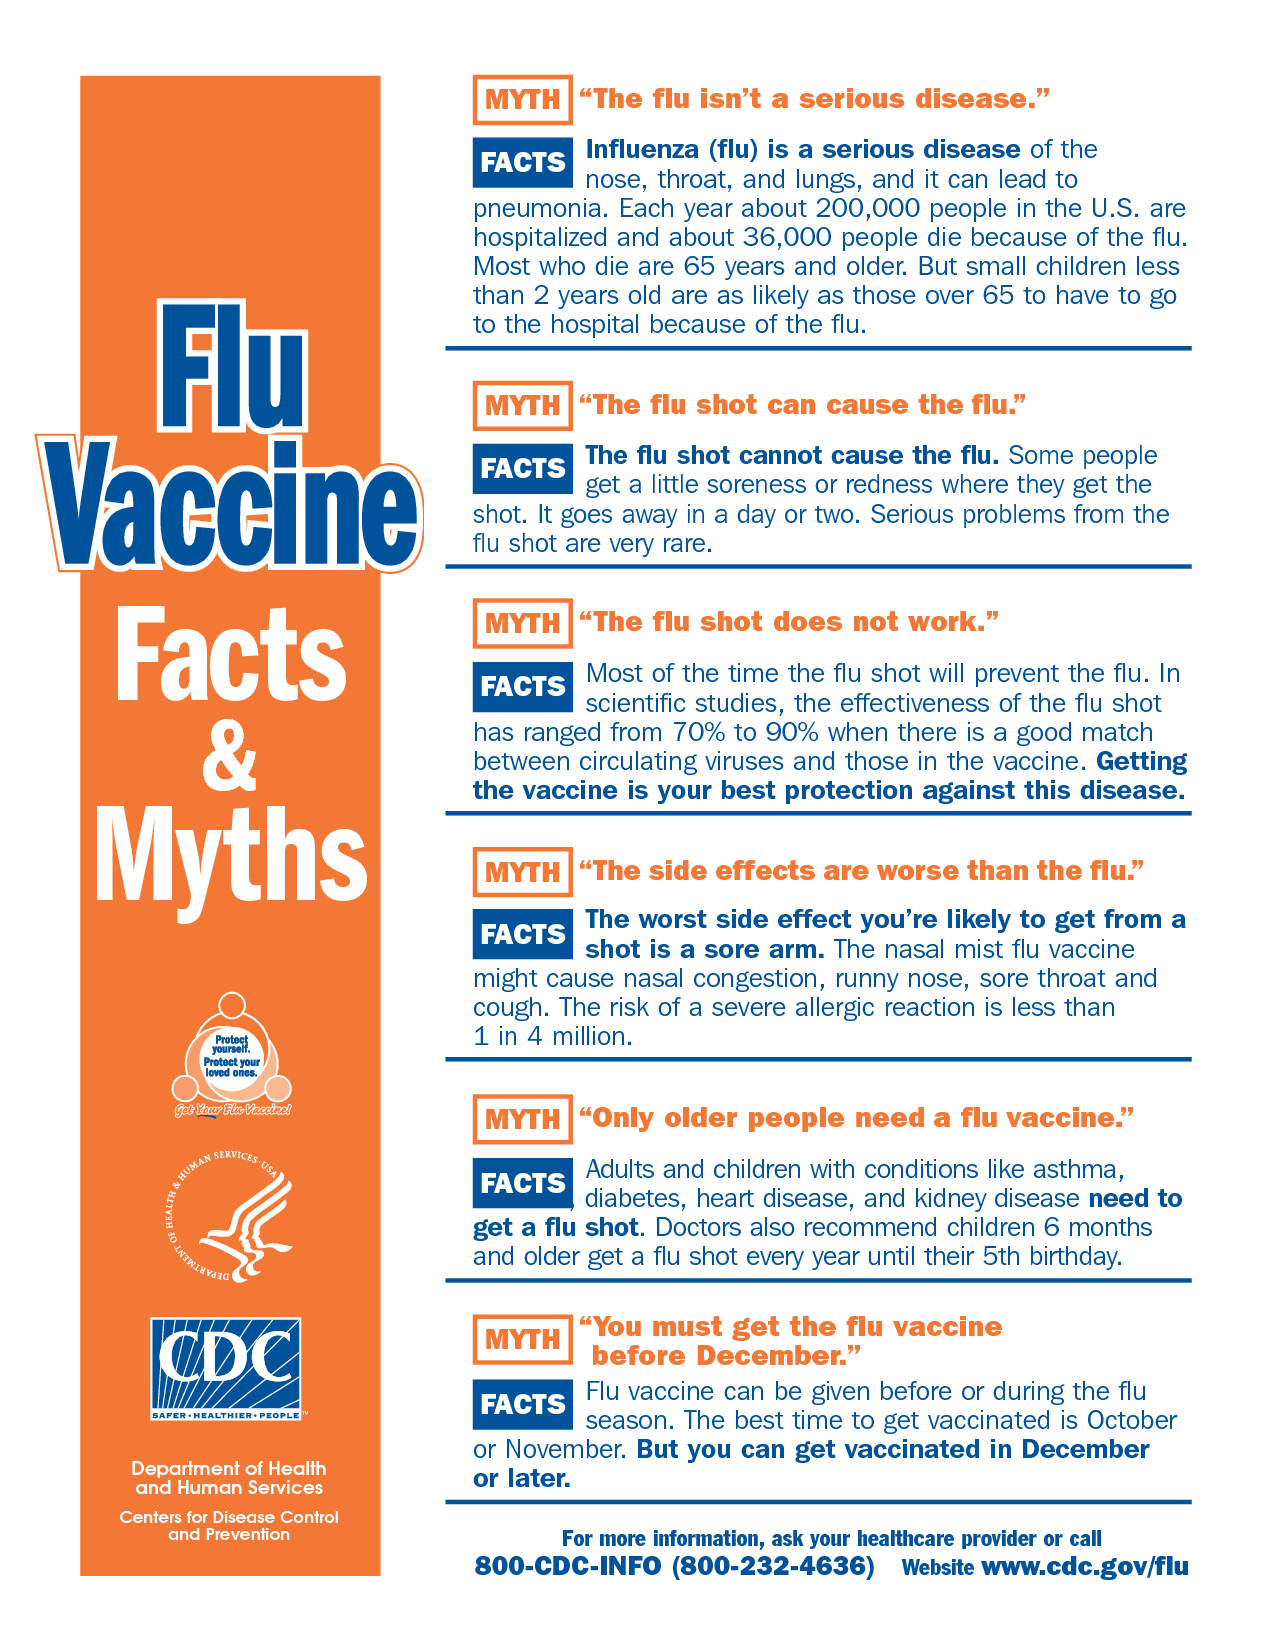 Flu vaccine facts